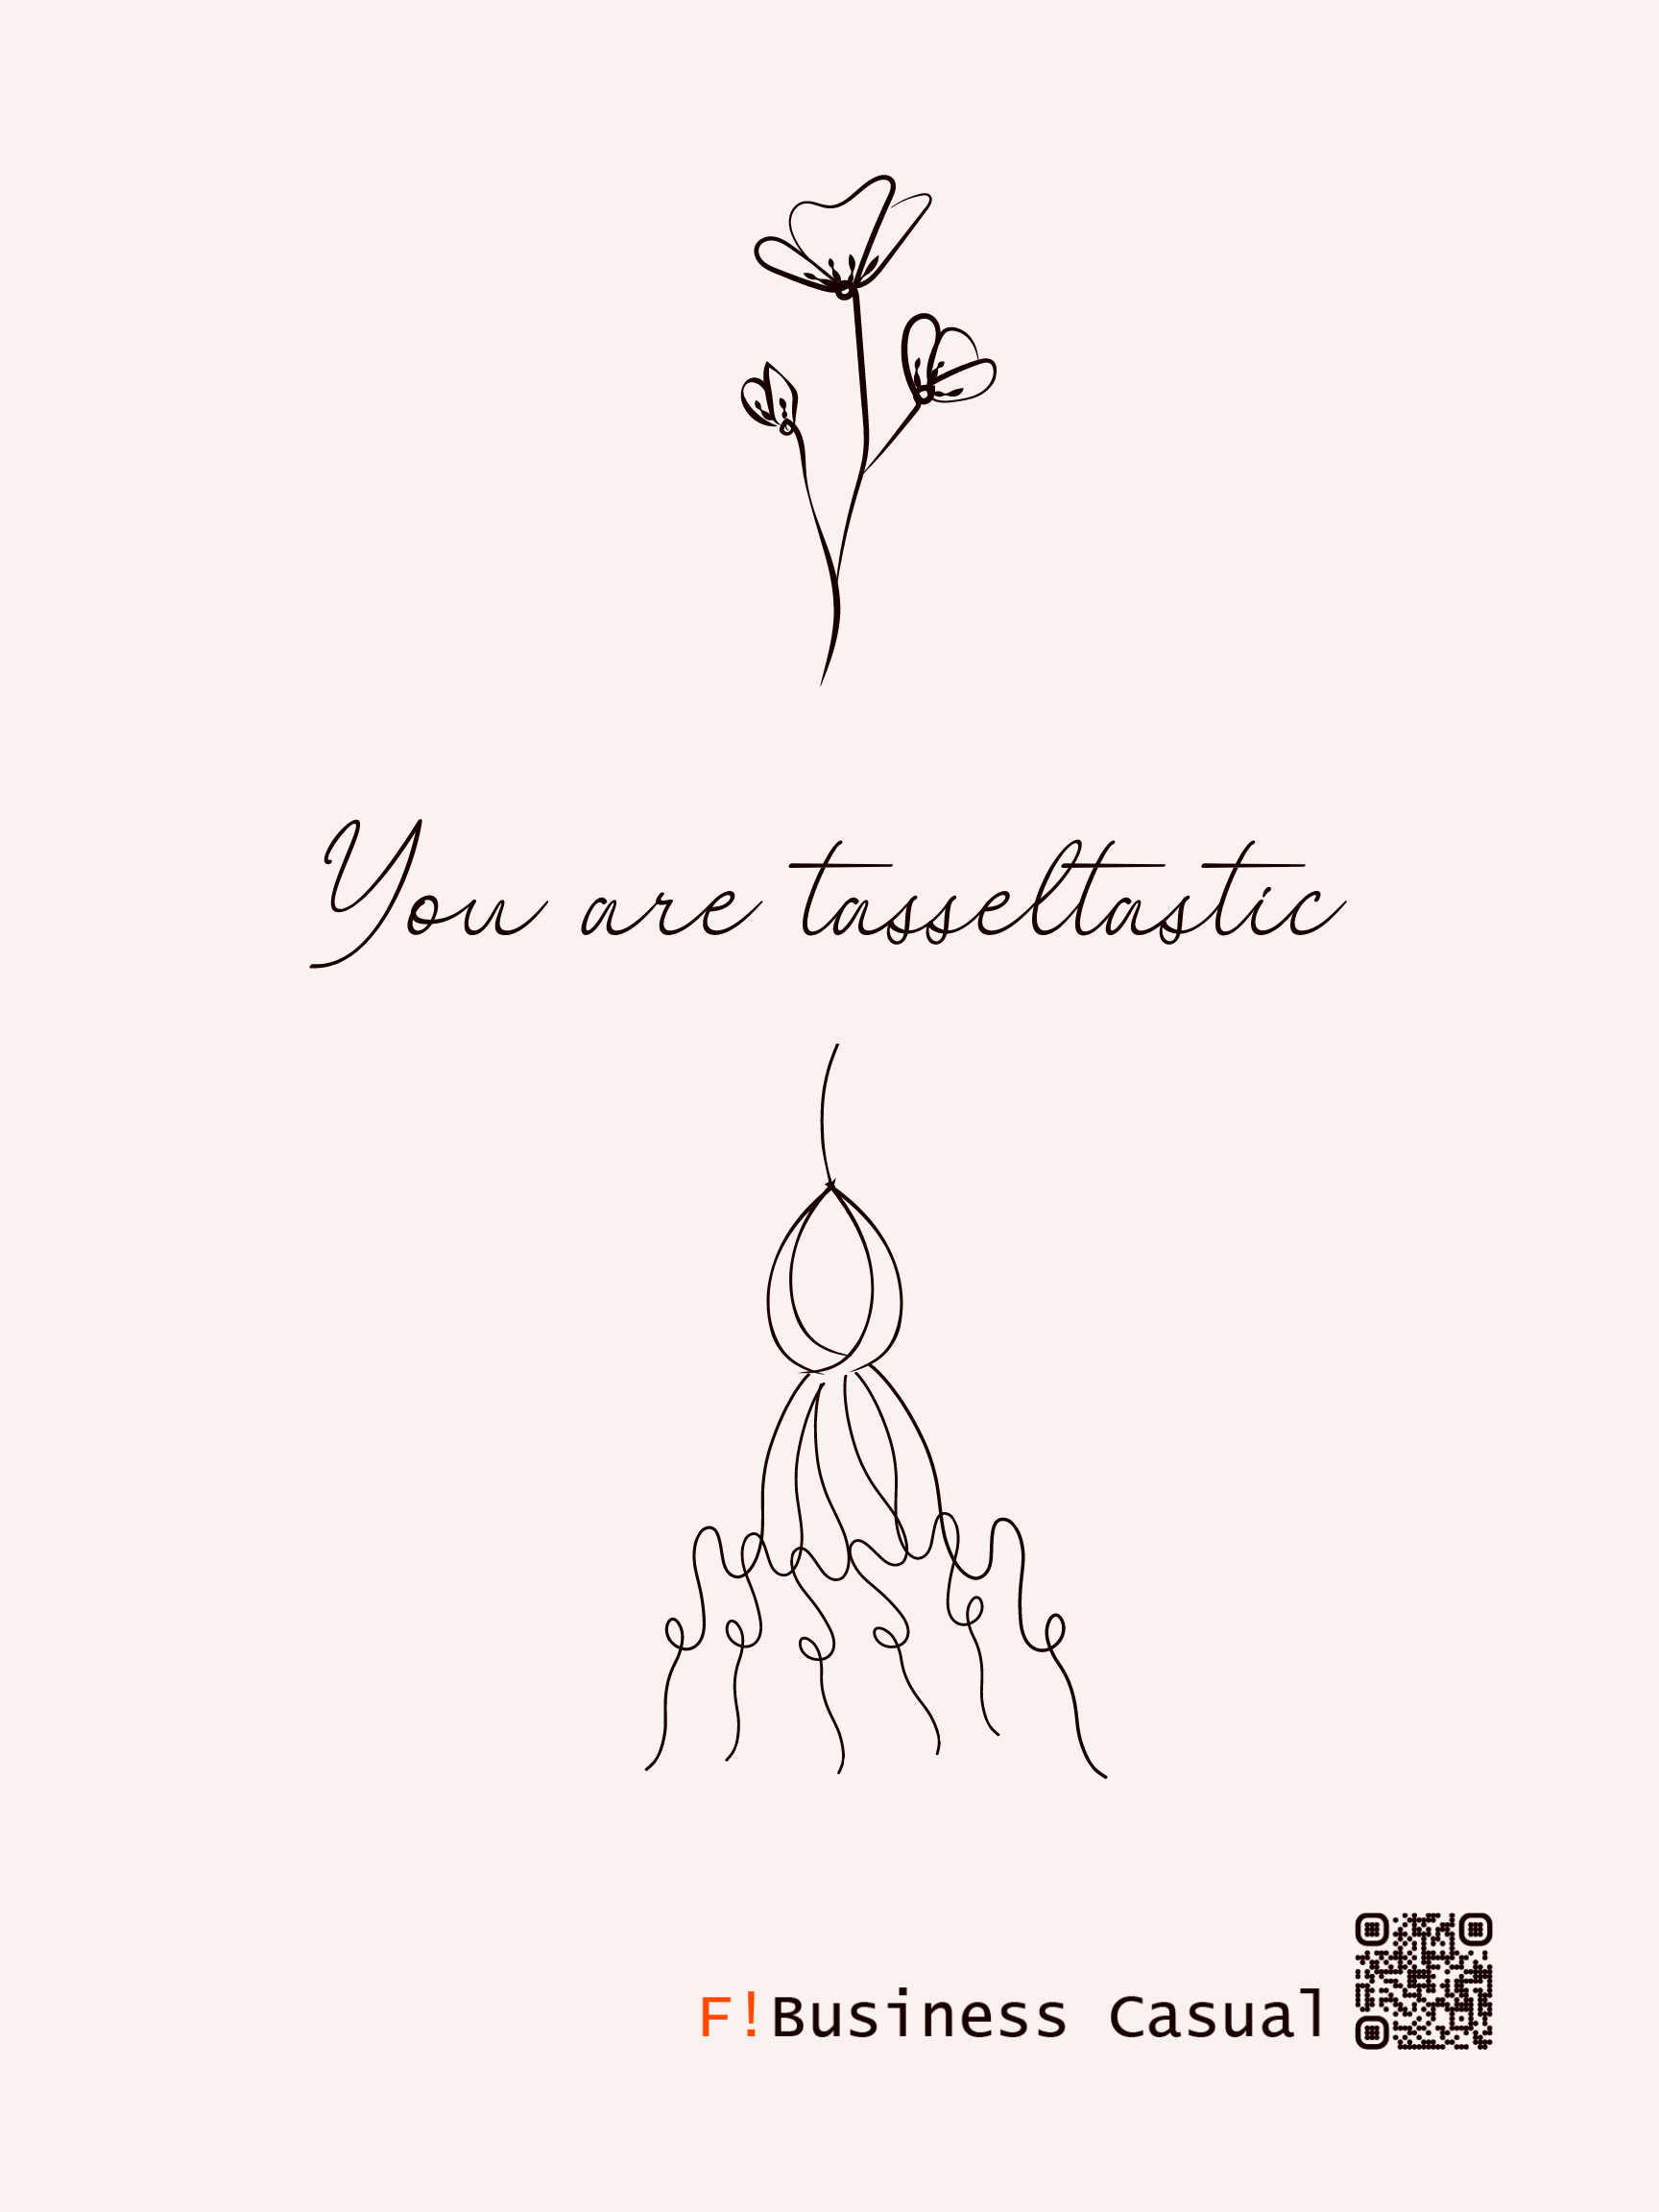 You are tassel-tastic